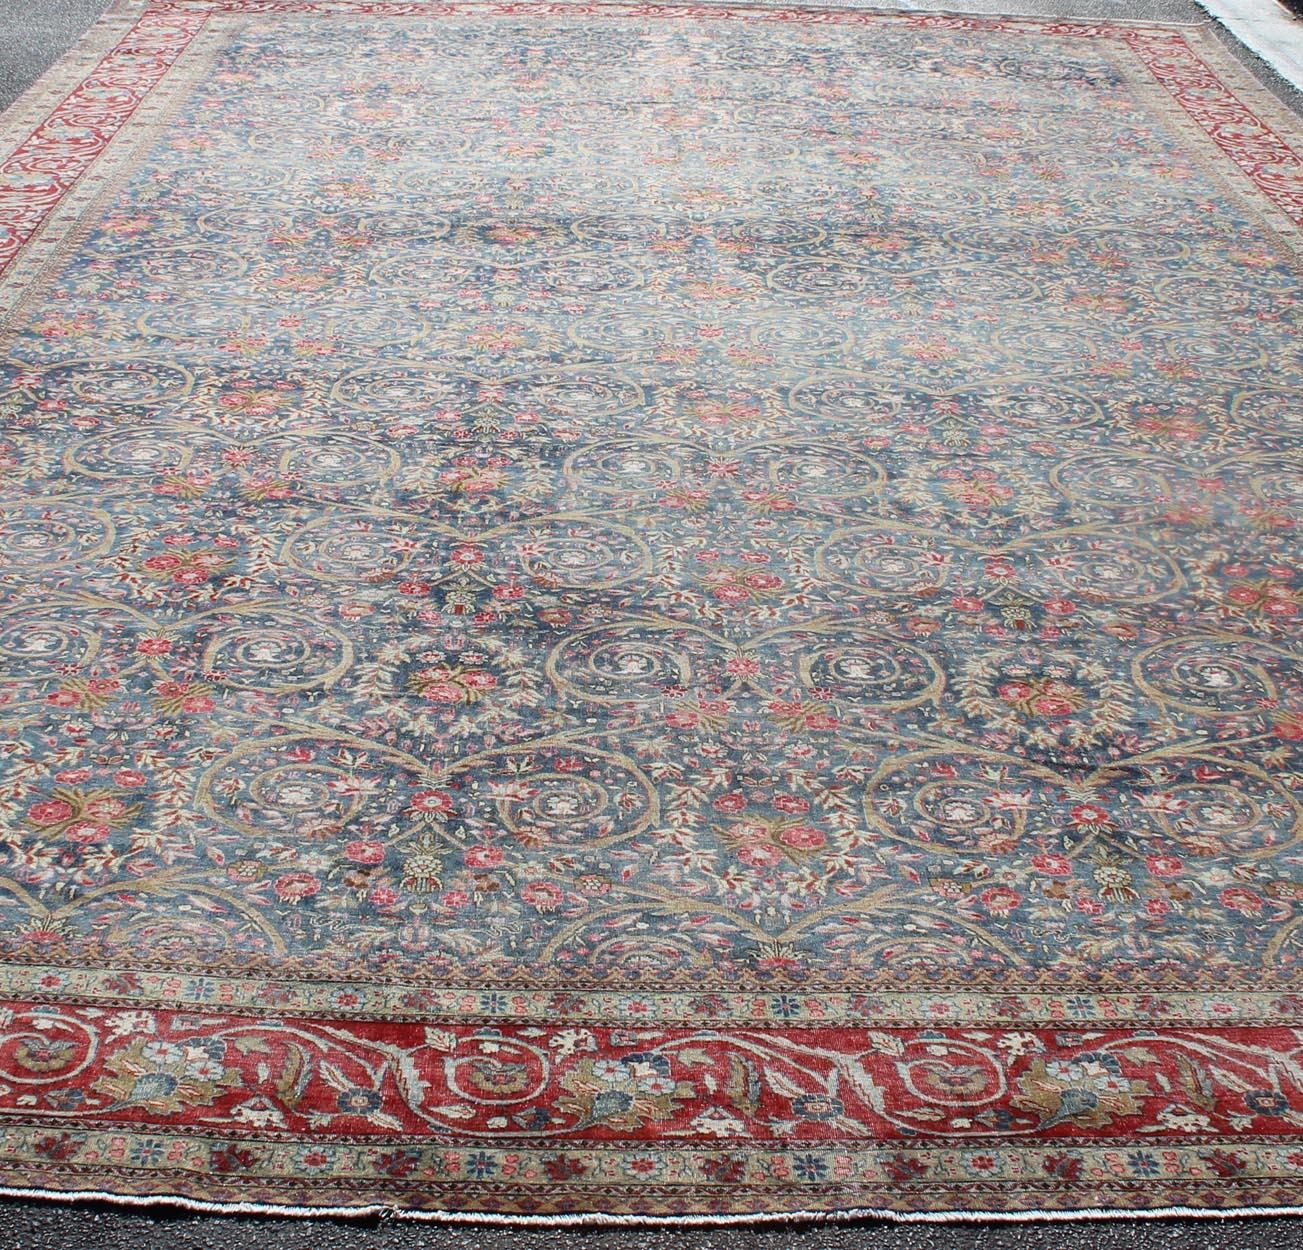 Large Antique Persian Tabriz Rug in Vine Scroll Design in Blue Background, Red For Sale 6